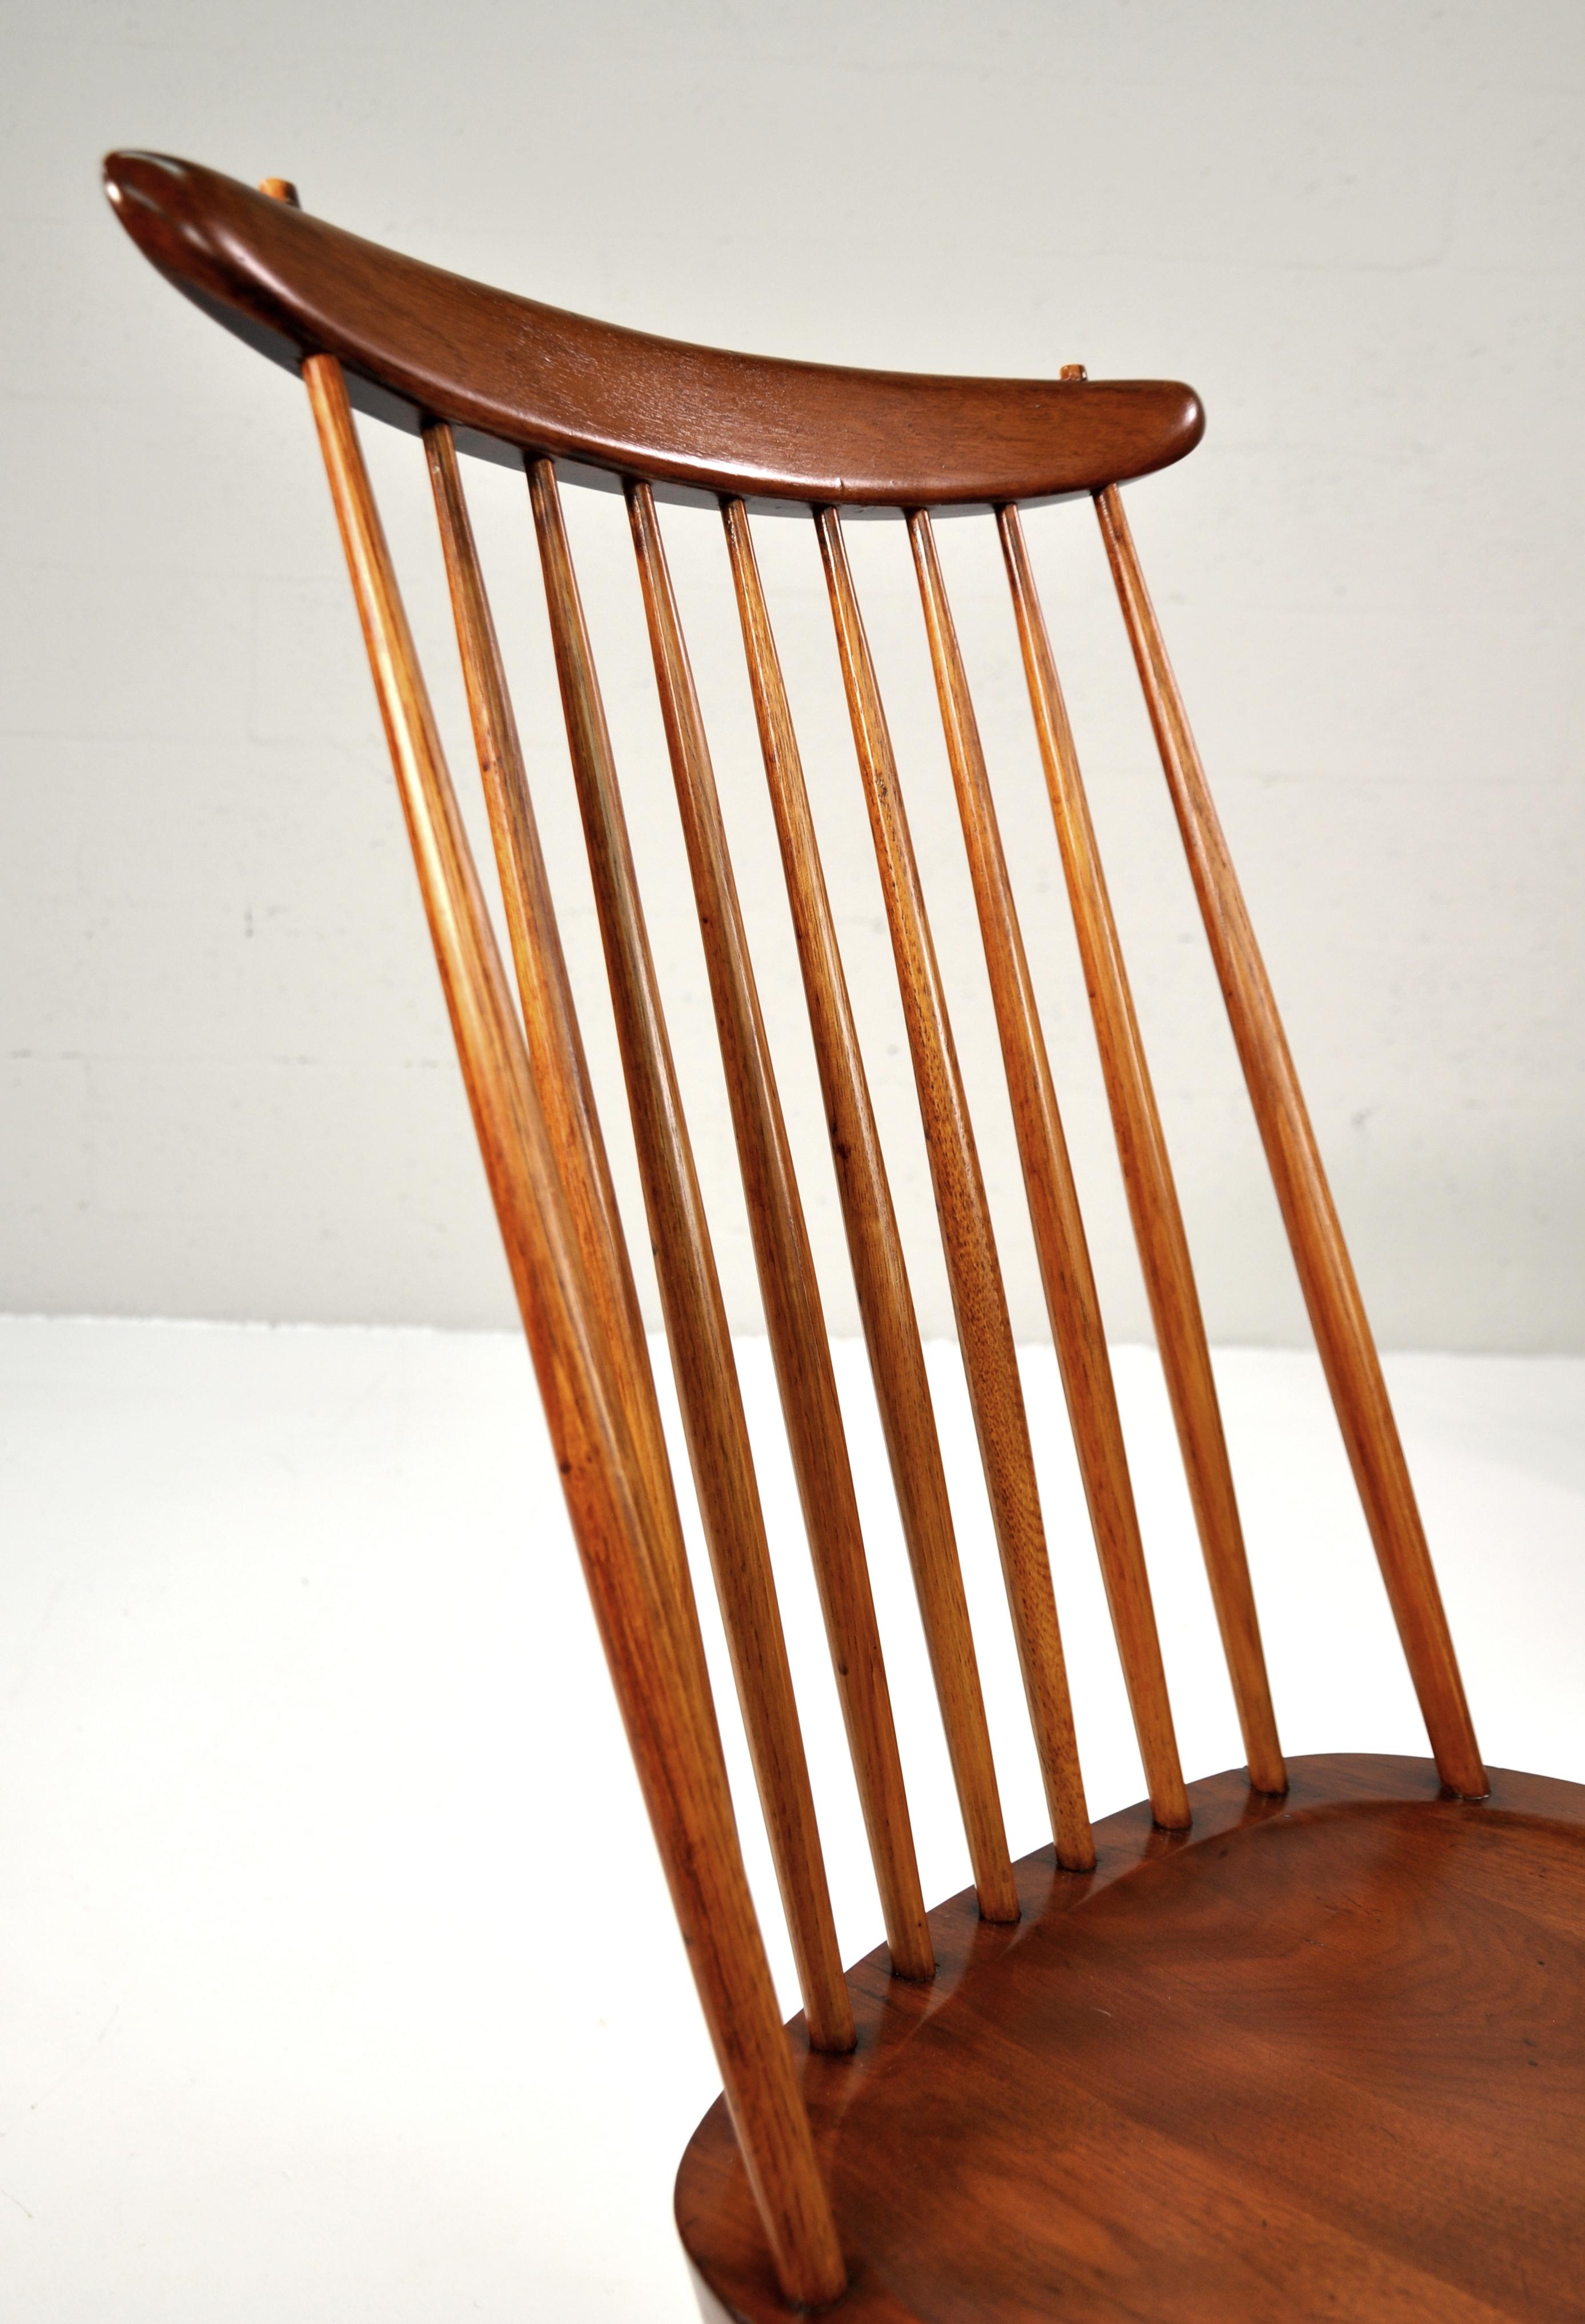 American Craftsman George Nakashima New Chair